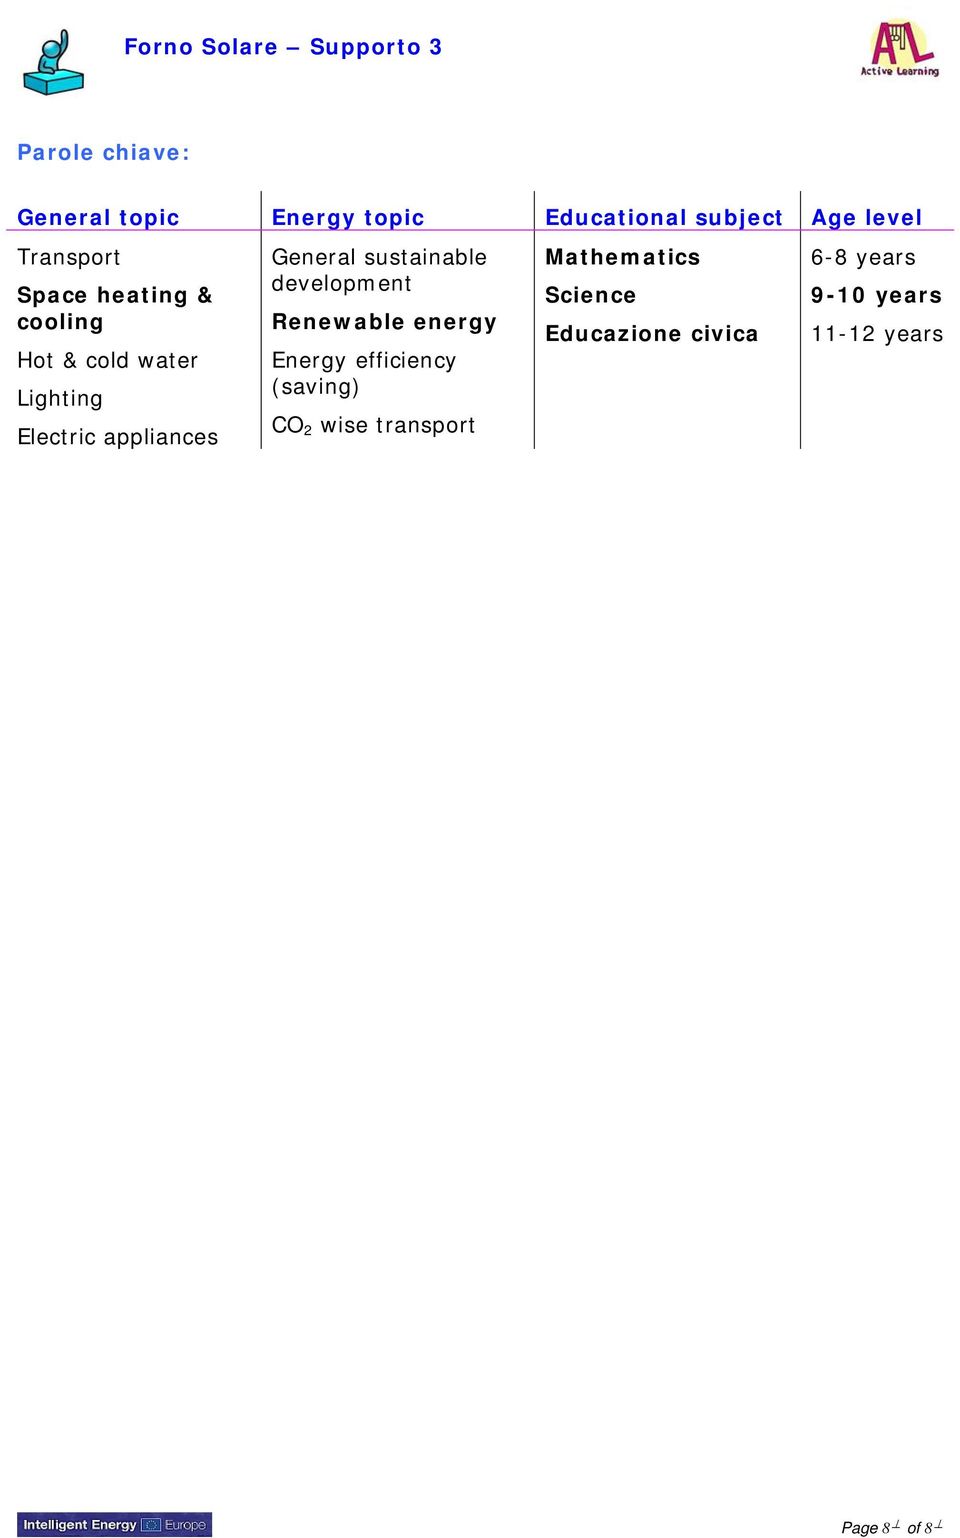 appliances General sustainable development Renewable energy Energy efficiency (saving)